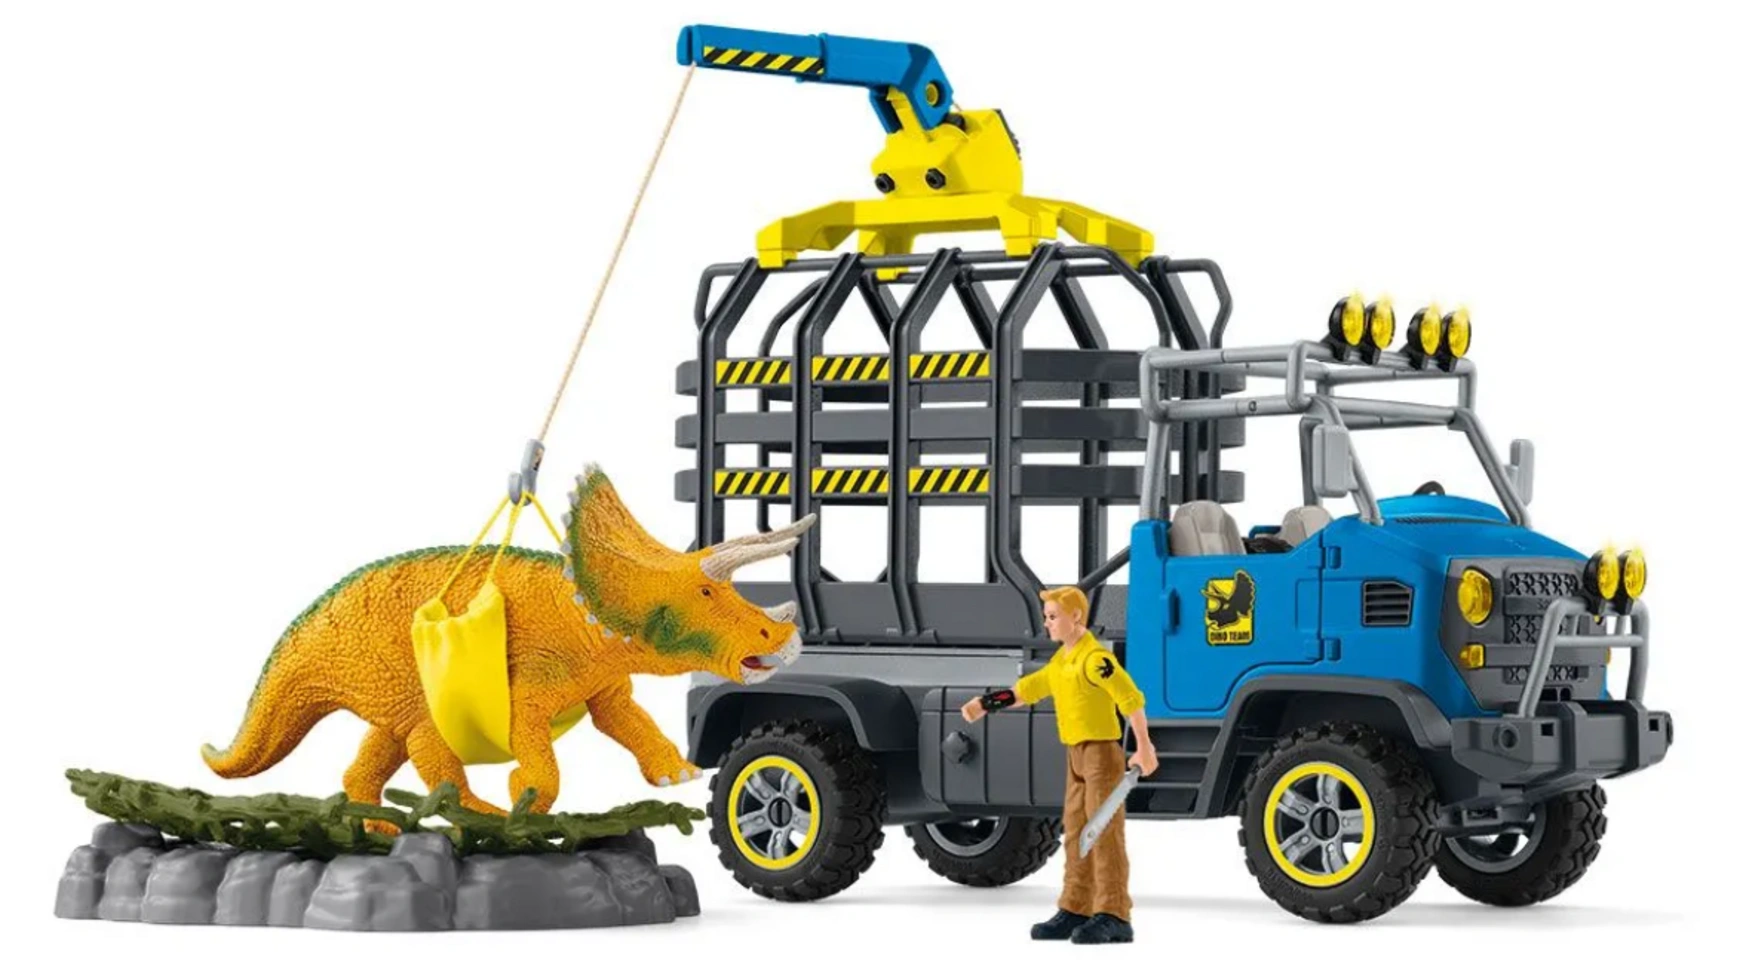 Schleich Динозавр Миссия на грузовике с динозаврами